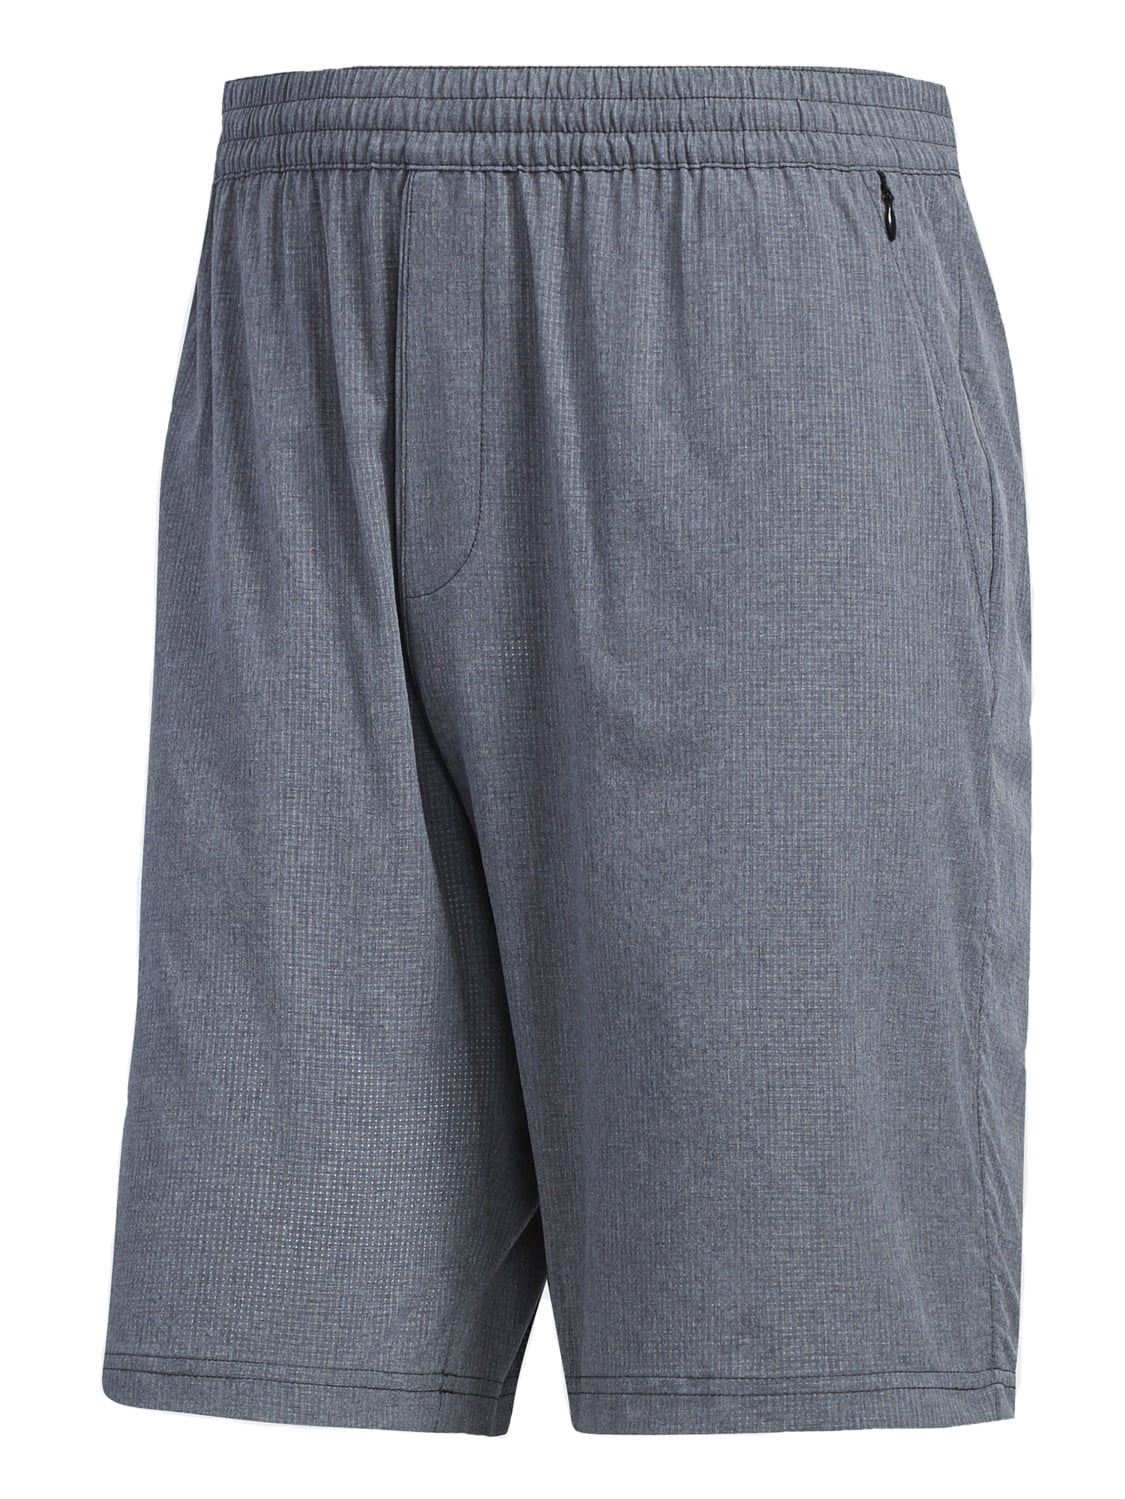 Adidas Golf Adicross Range Shorts Grey 